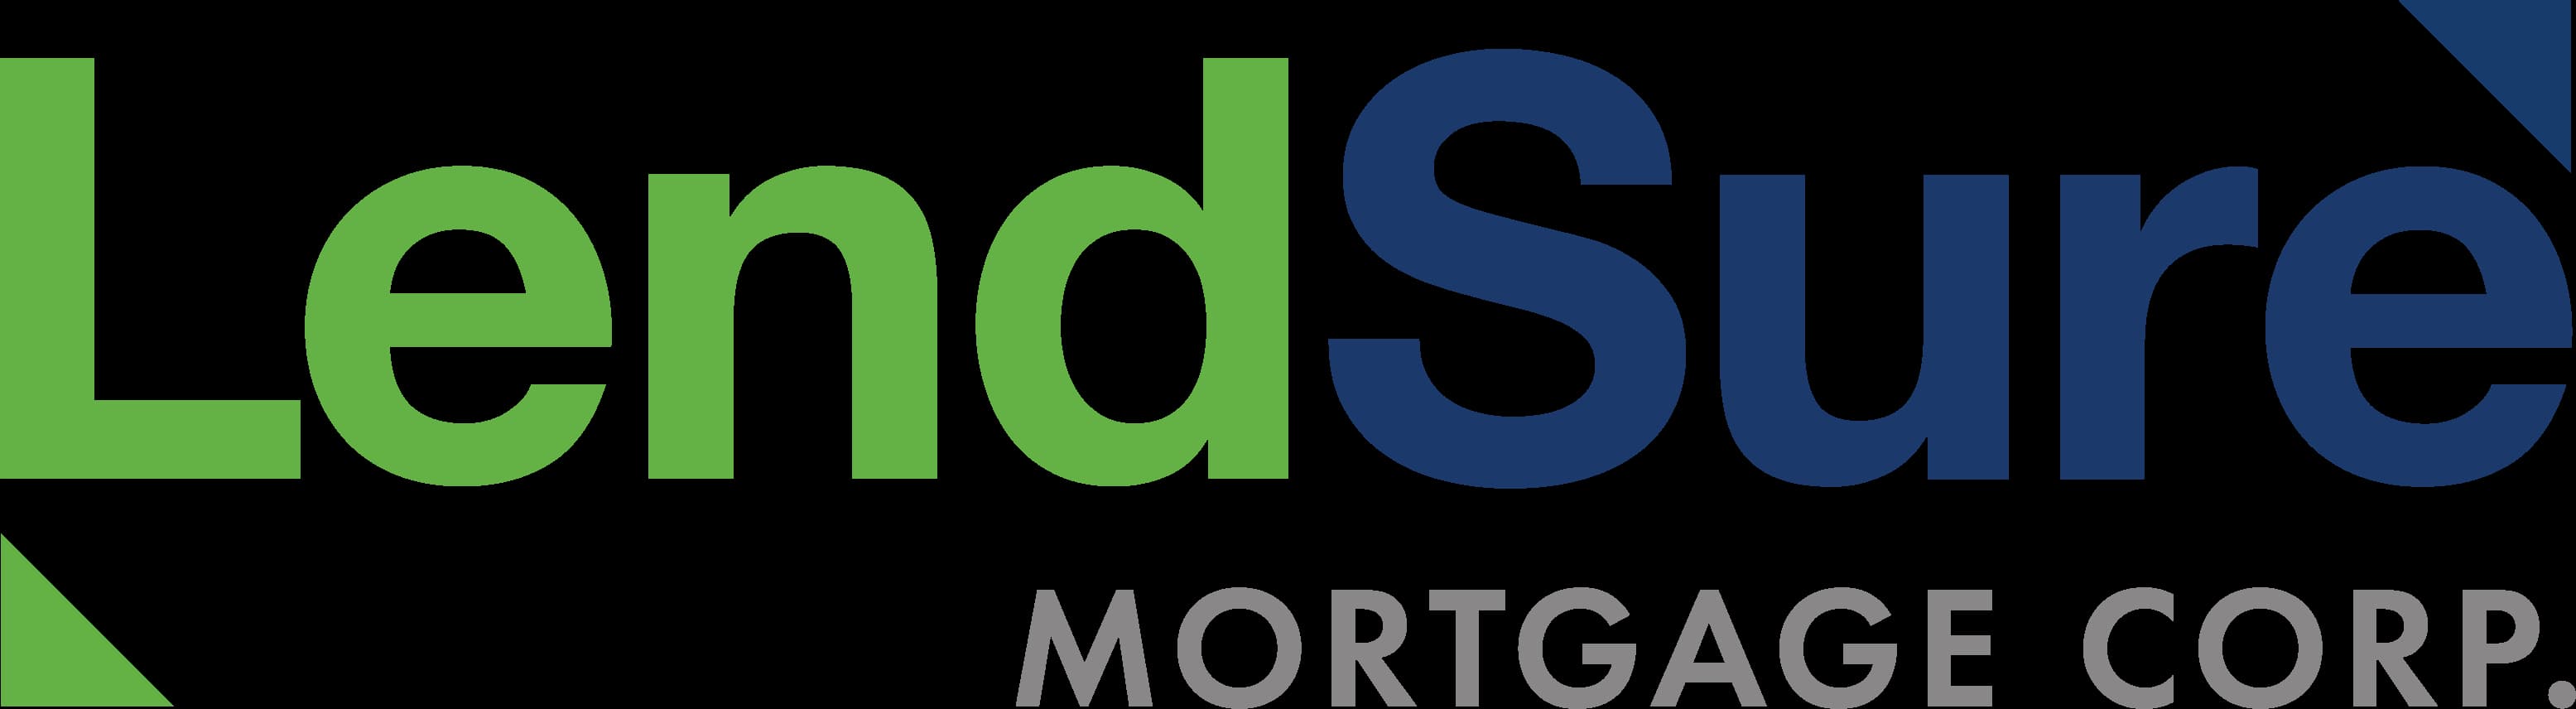 LendSure Mortgage Corp. Logo